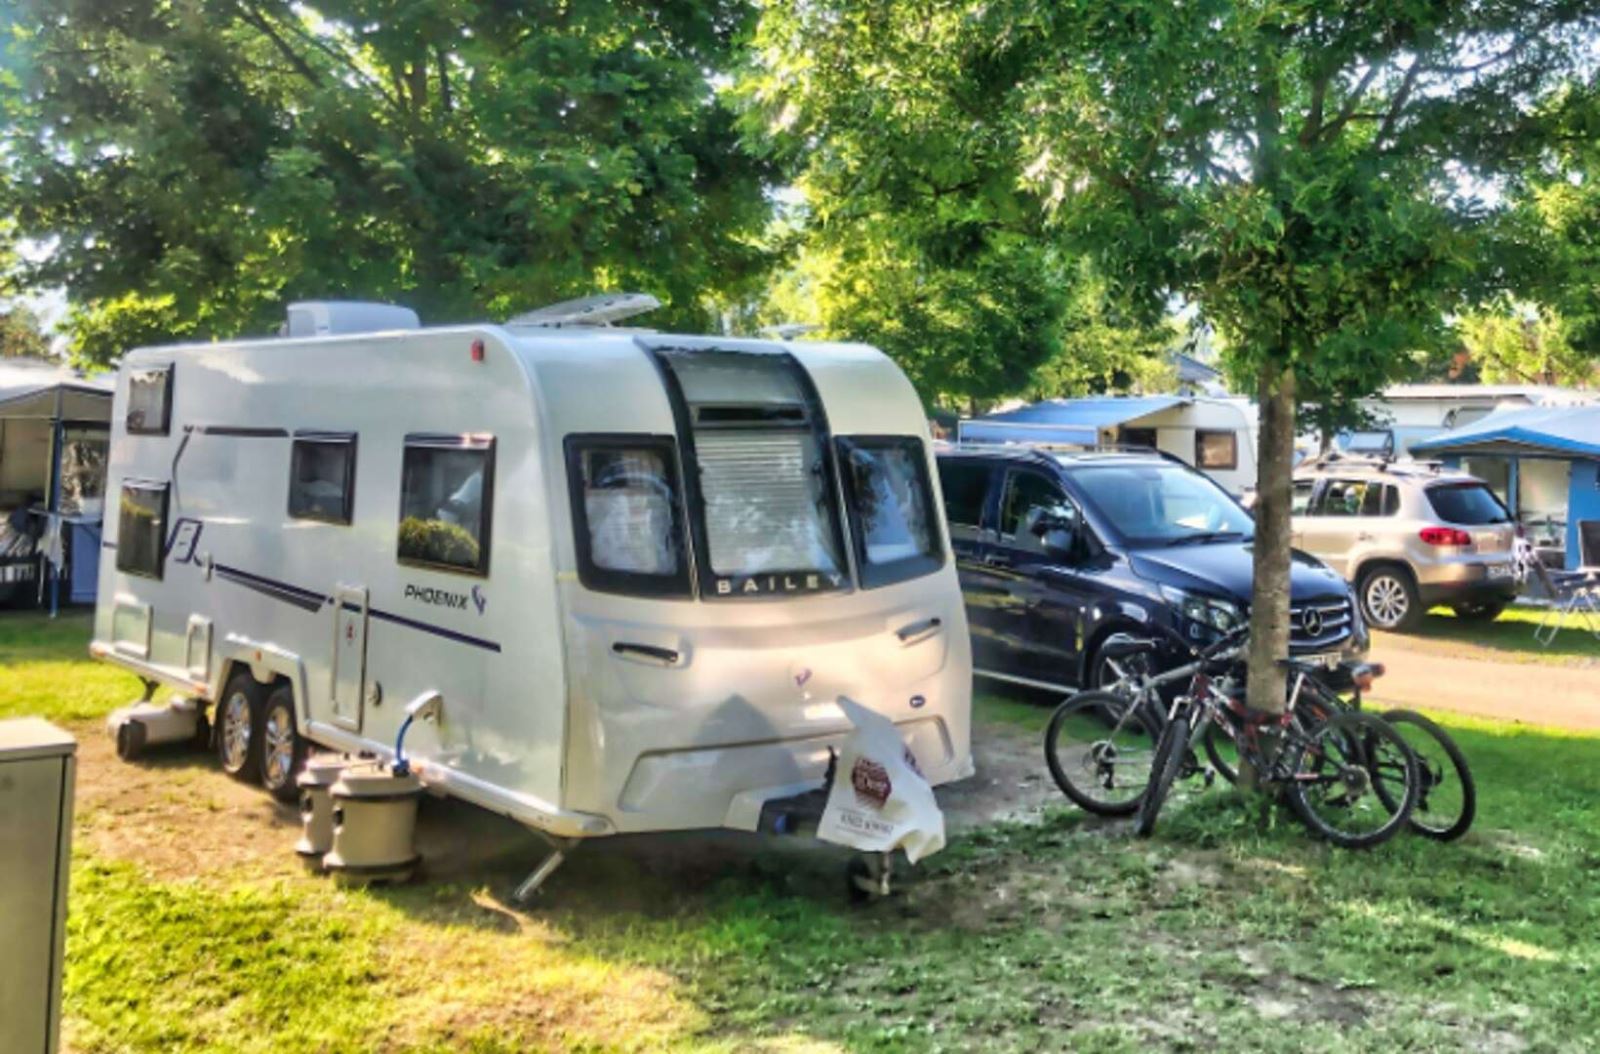 A caravan with bikes